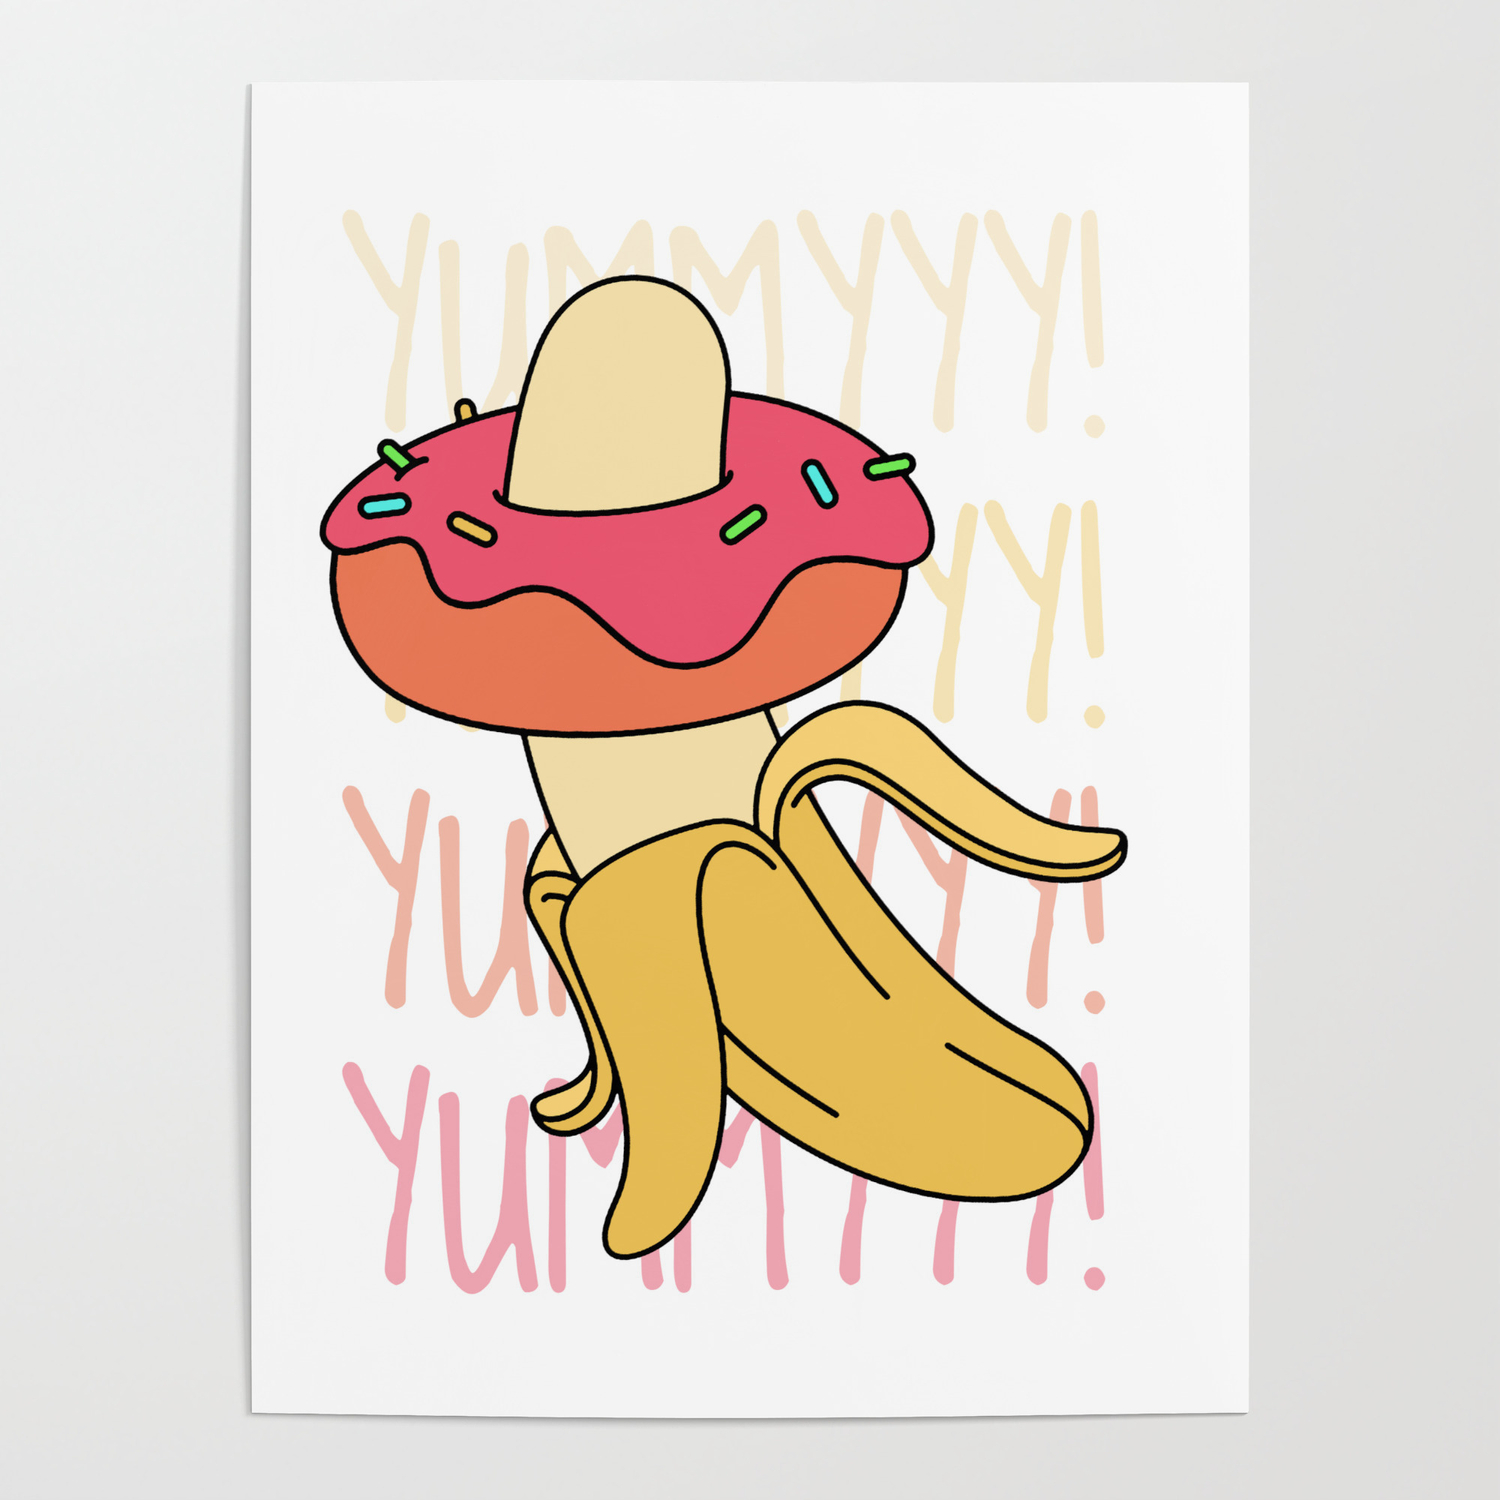 Banana Donut Yummy Poster ankarsdesign | Society6